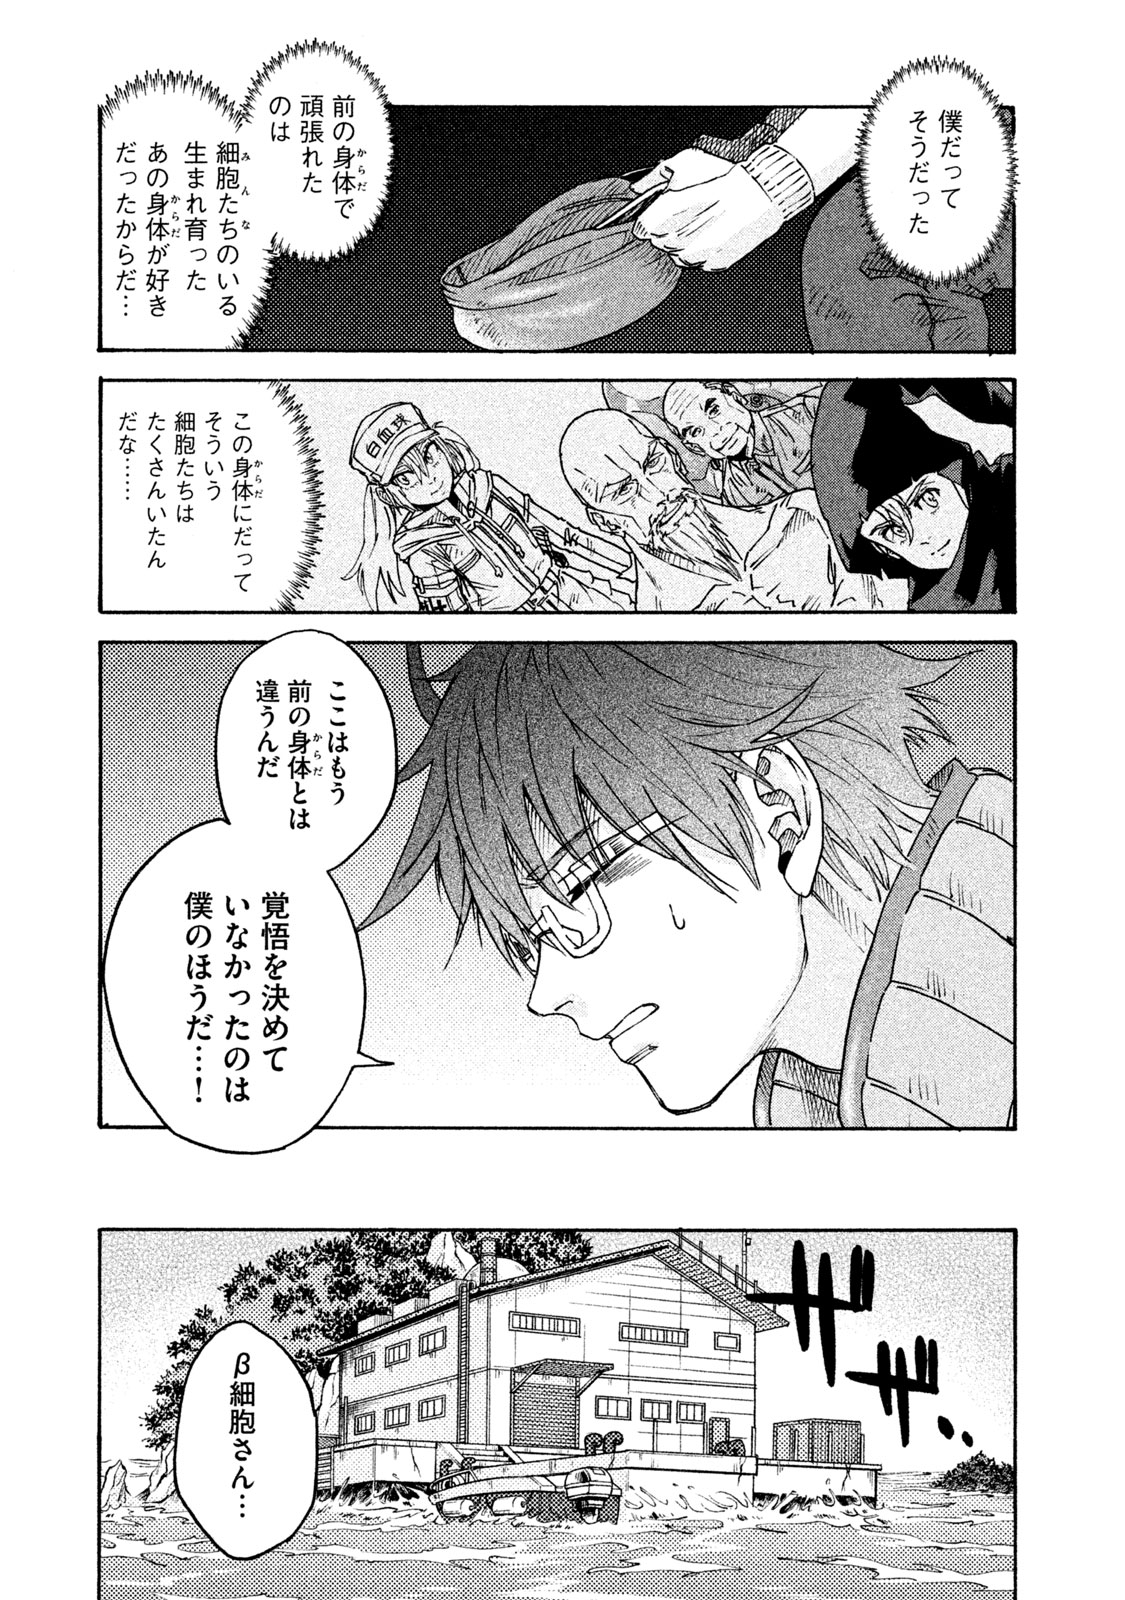 Hataraku Saibou BLACK - Chapter 20 - Page 19